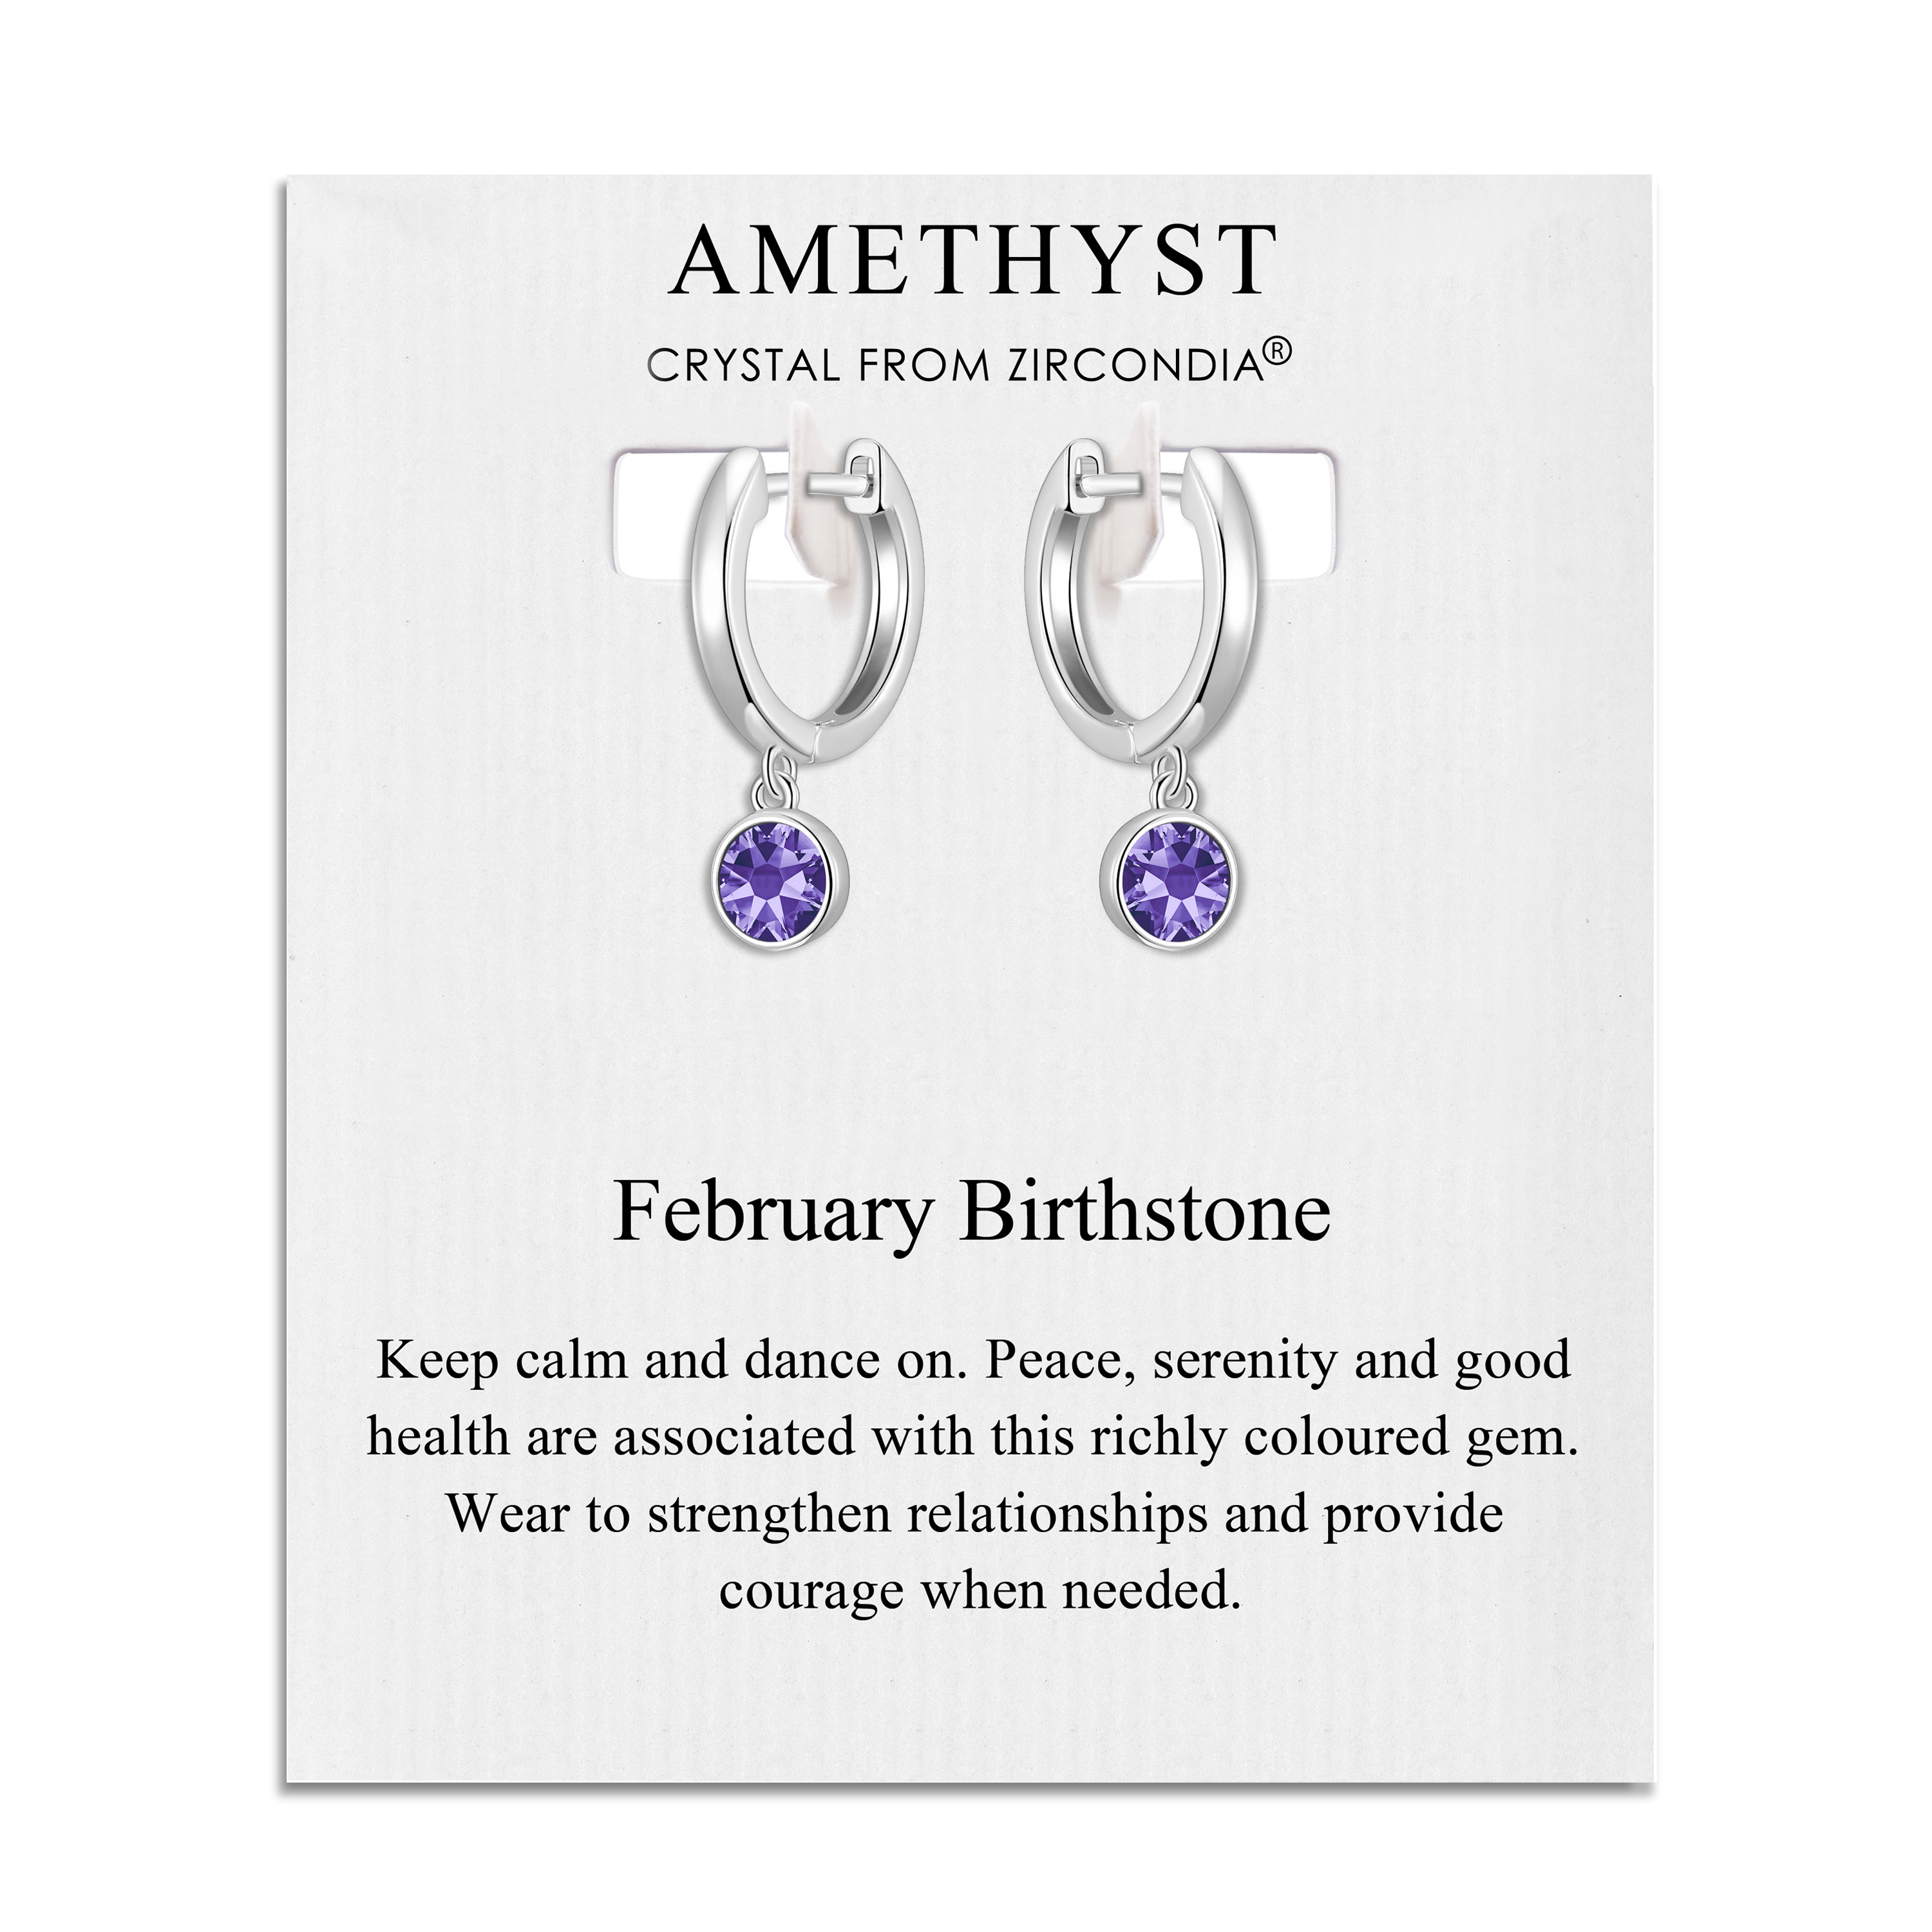 February Birthstone Hoop Earrings Created with Amethyst Zircondia® Crystals by Philip Jones Jewellery